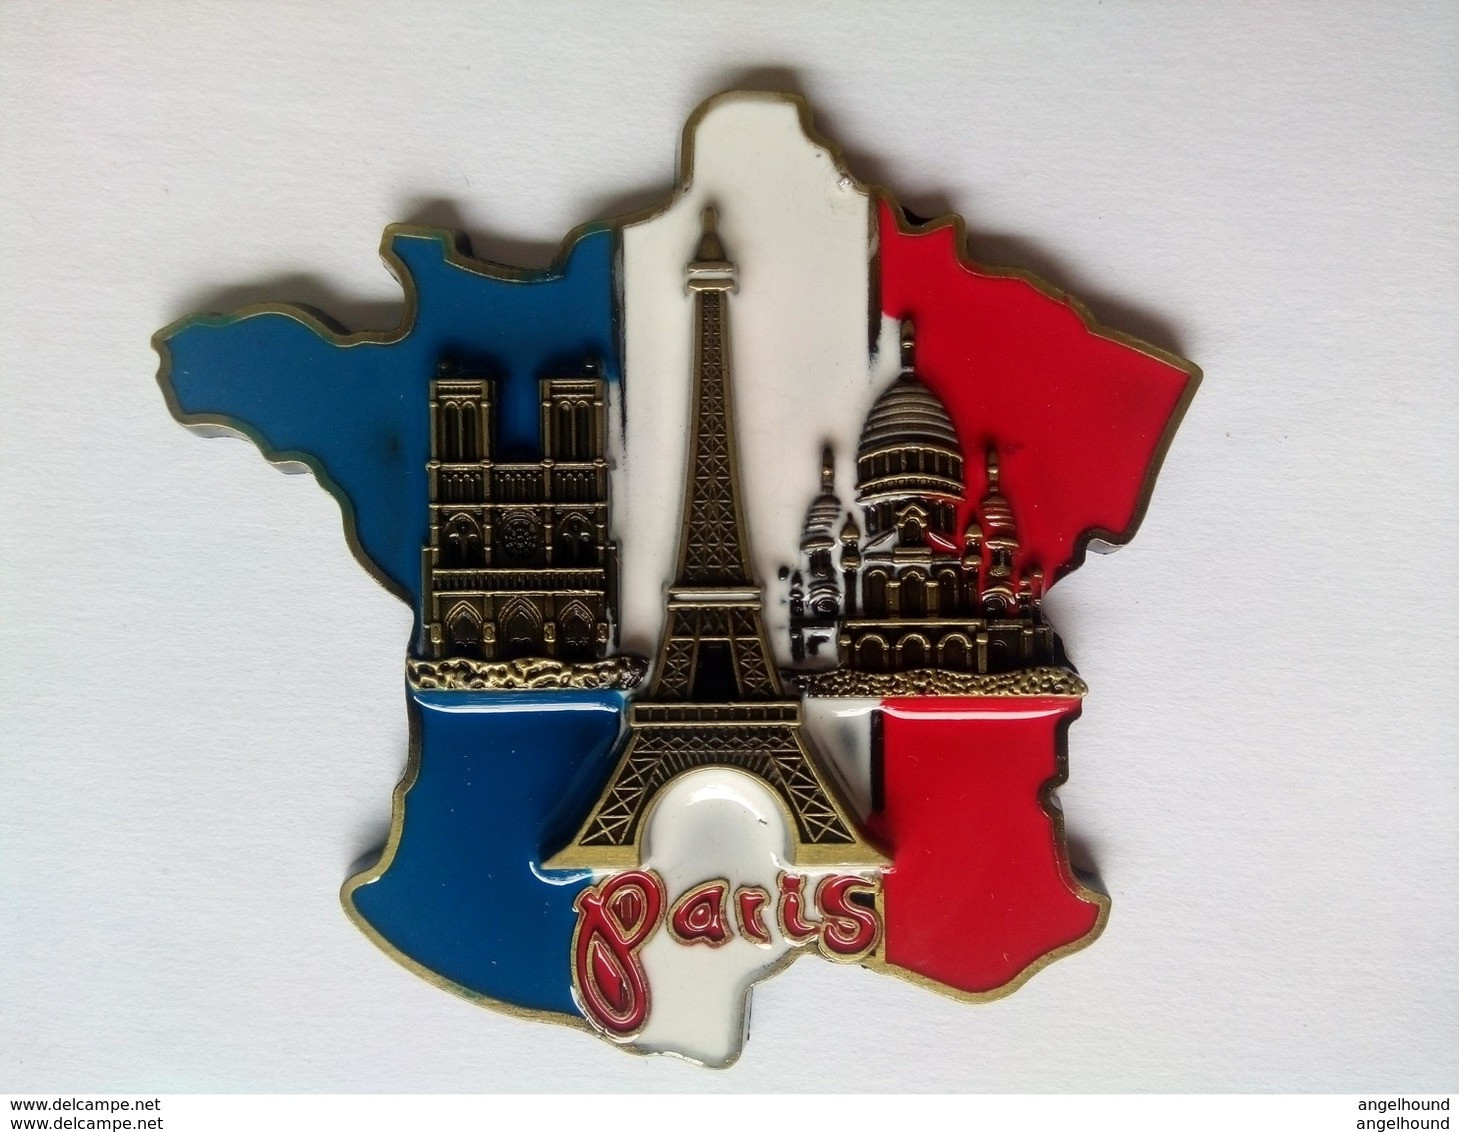 Paris - Tourisme